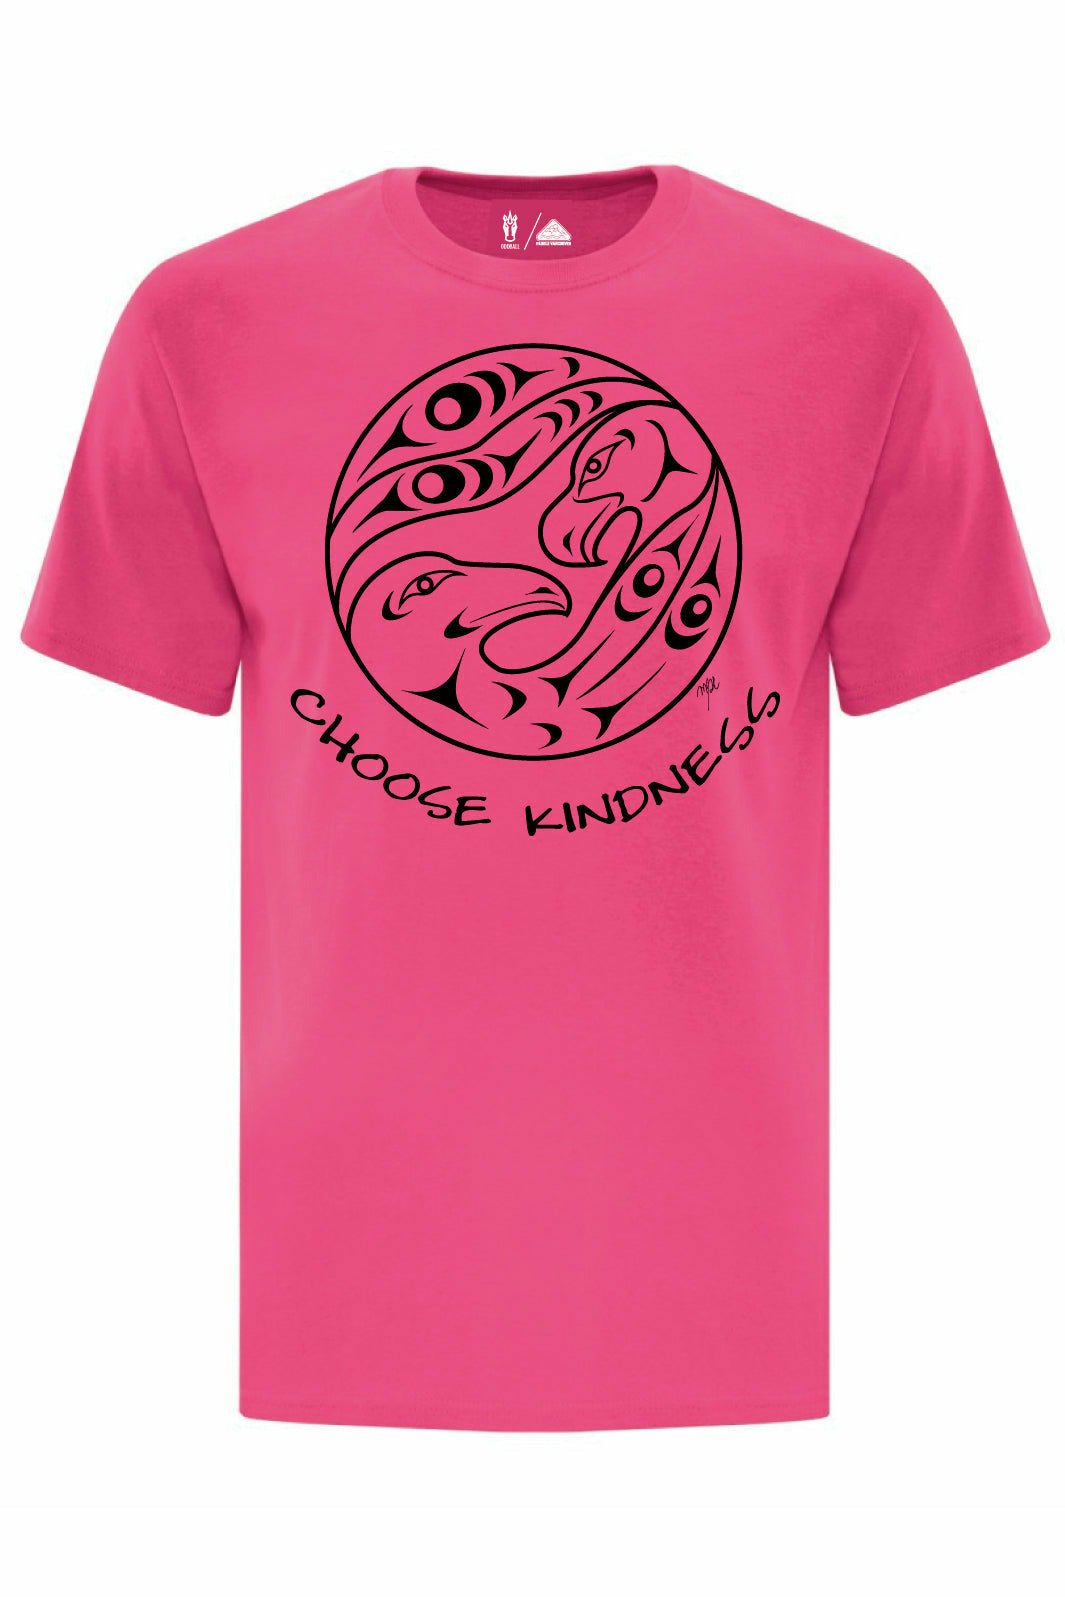 Melaney | Choose Kindness T-shirt - Oddball Workshop